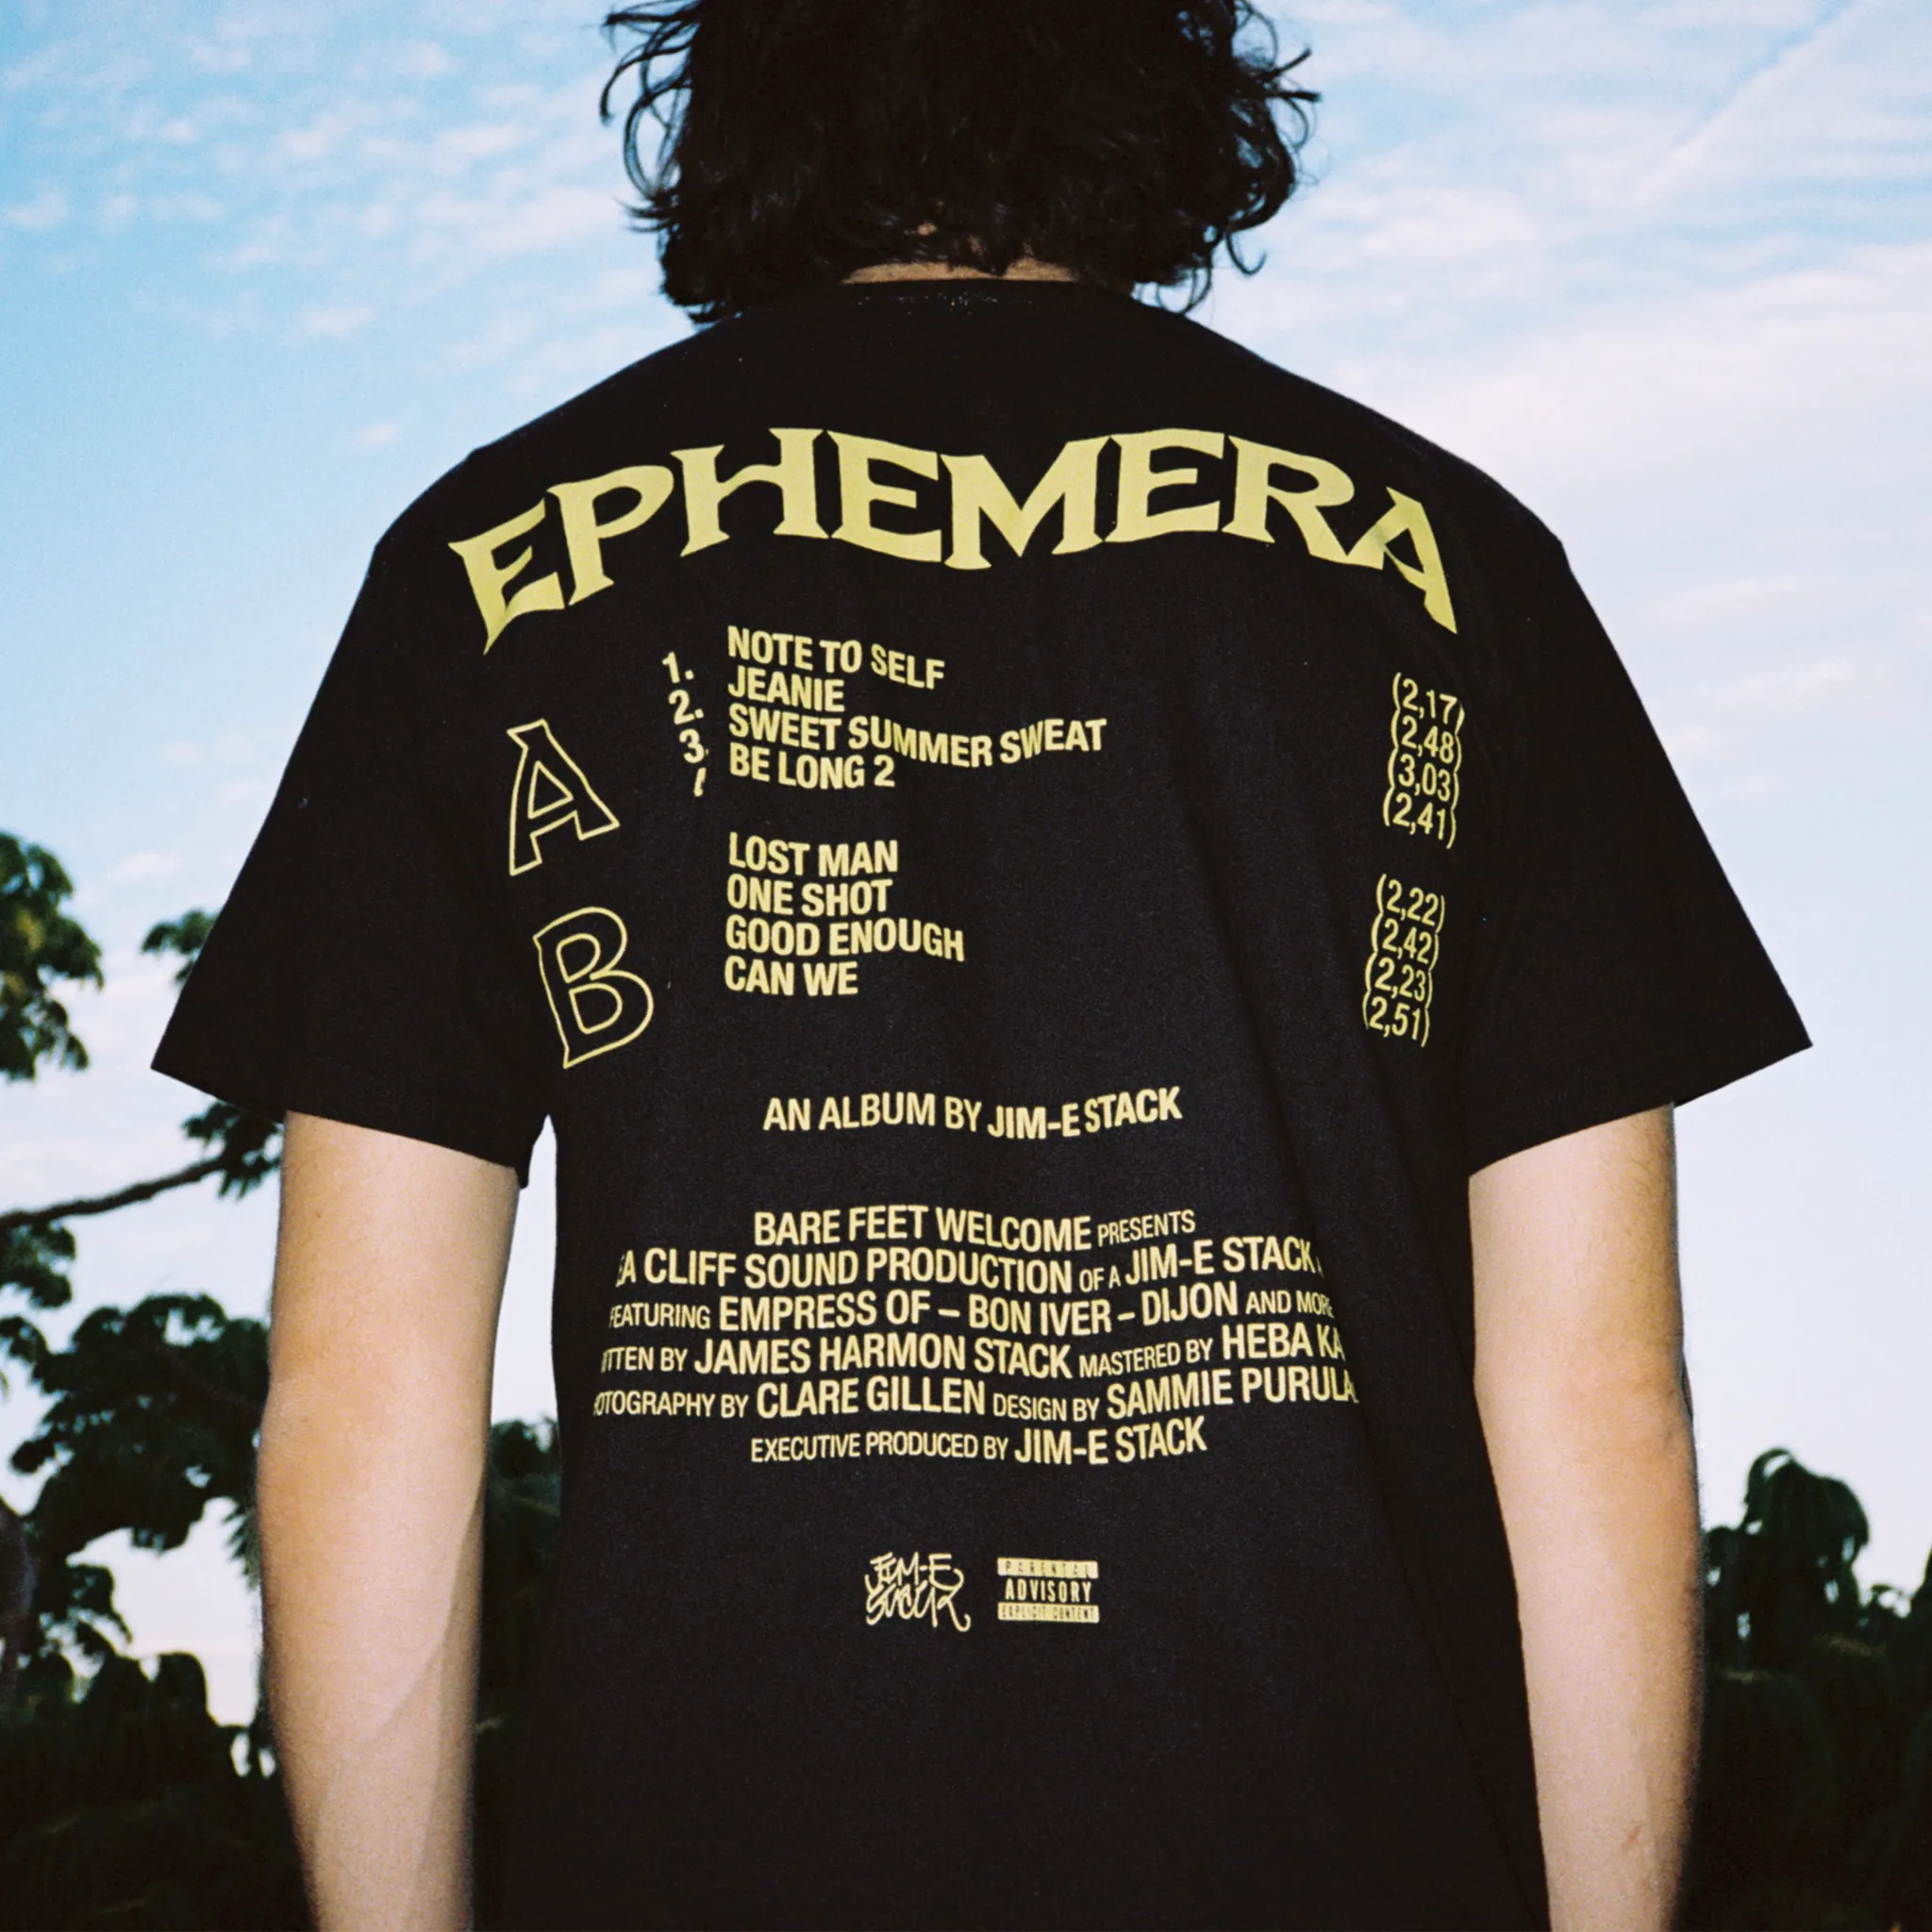 Buy Ephemera via Rough Trade